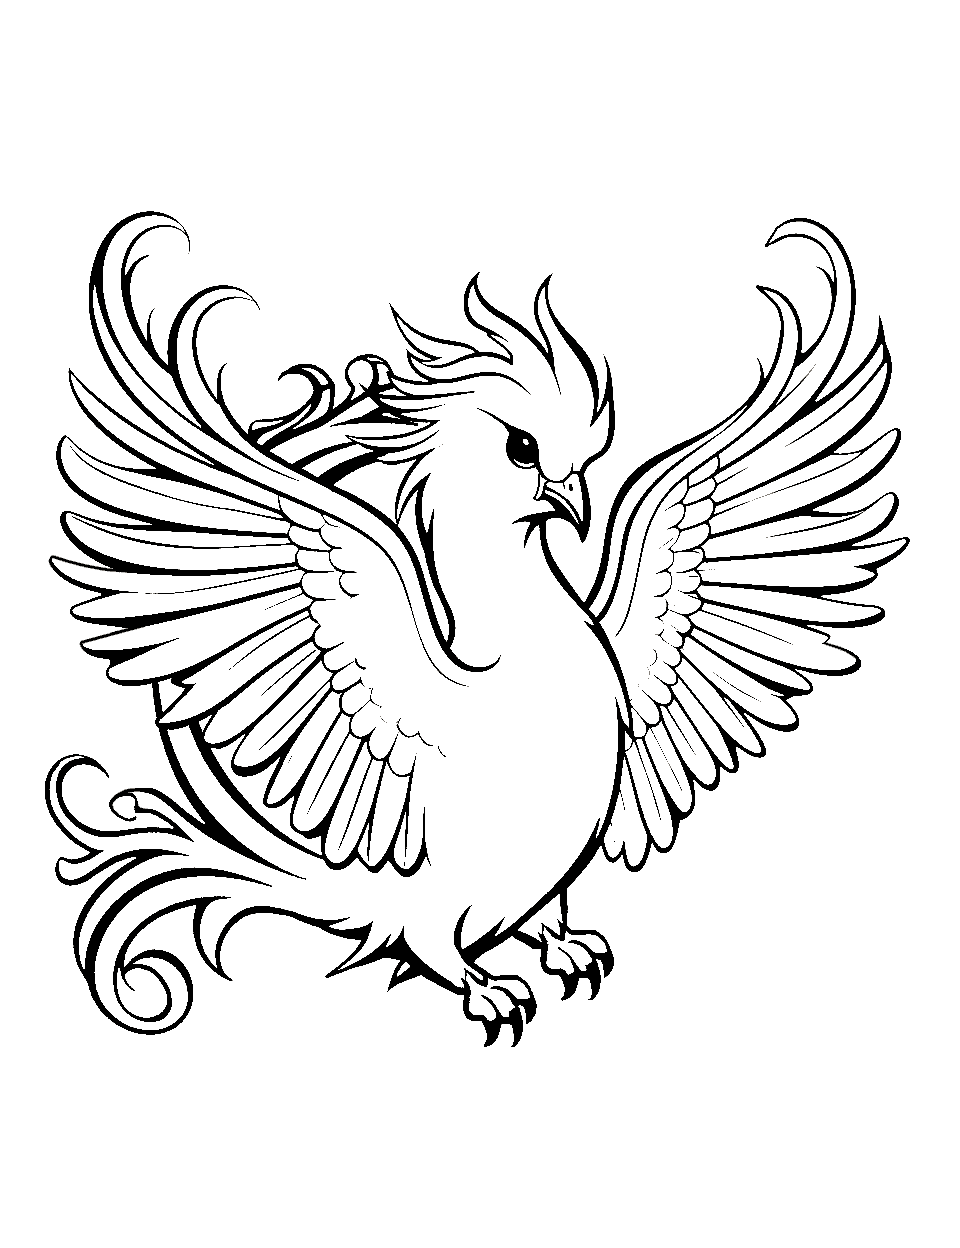 Phoenix Rising Coloring Page - The mythical phoenix soaring upwards.